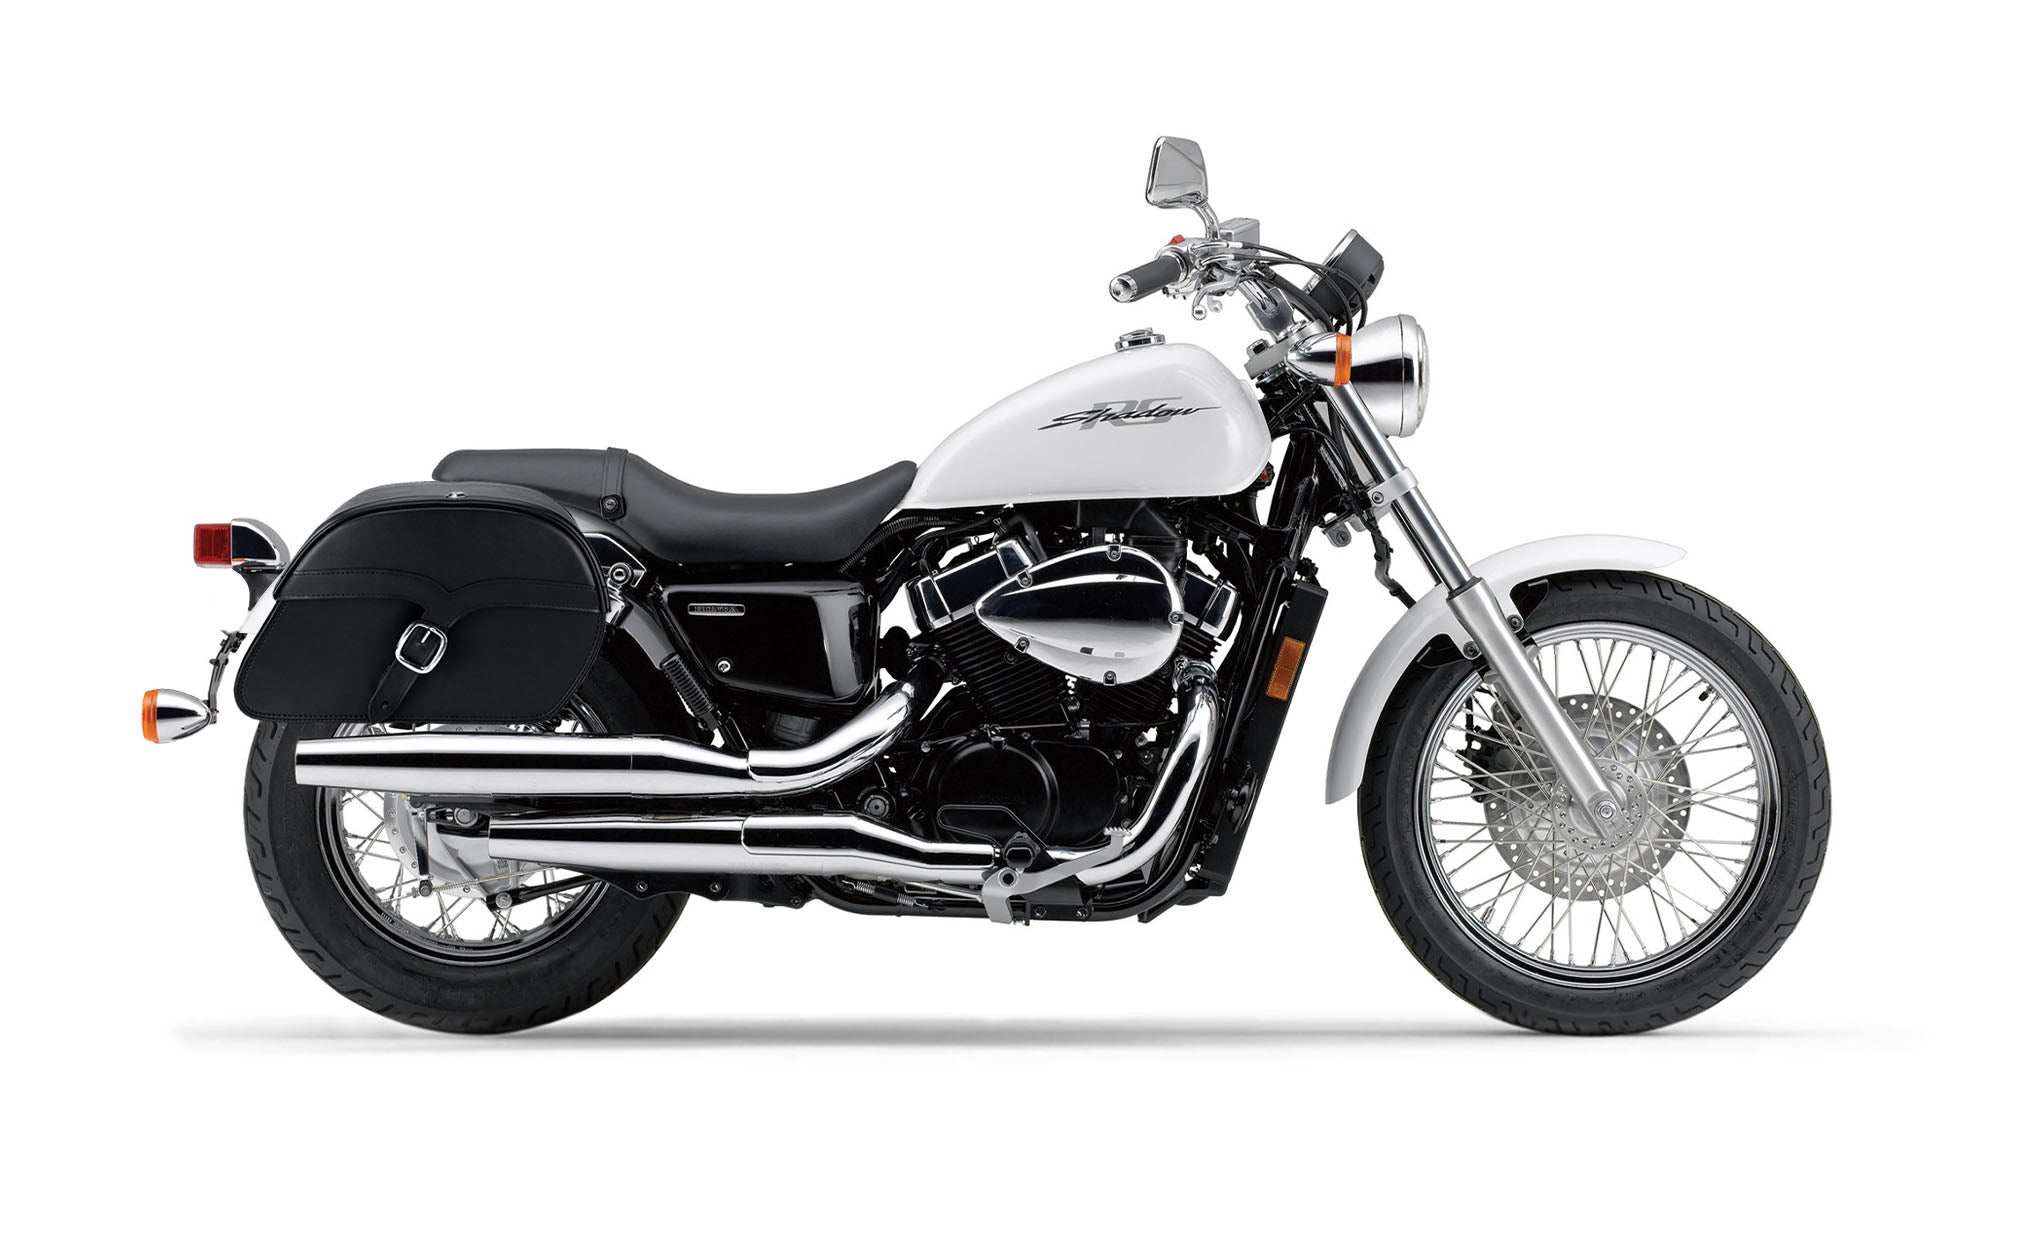 Viking Vintage Large Honda Shadow 750 Rs Shock Cut Out Leather Motorcycle Saddlebags on Bike Photo @expand